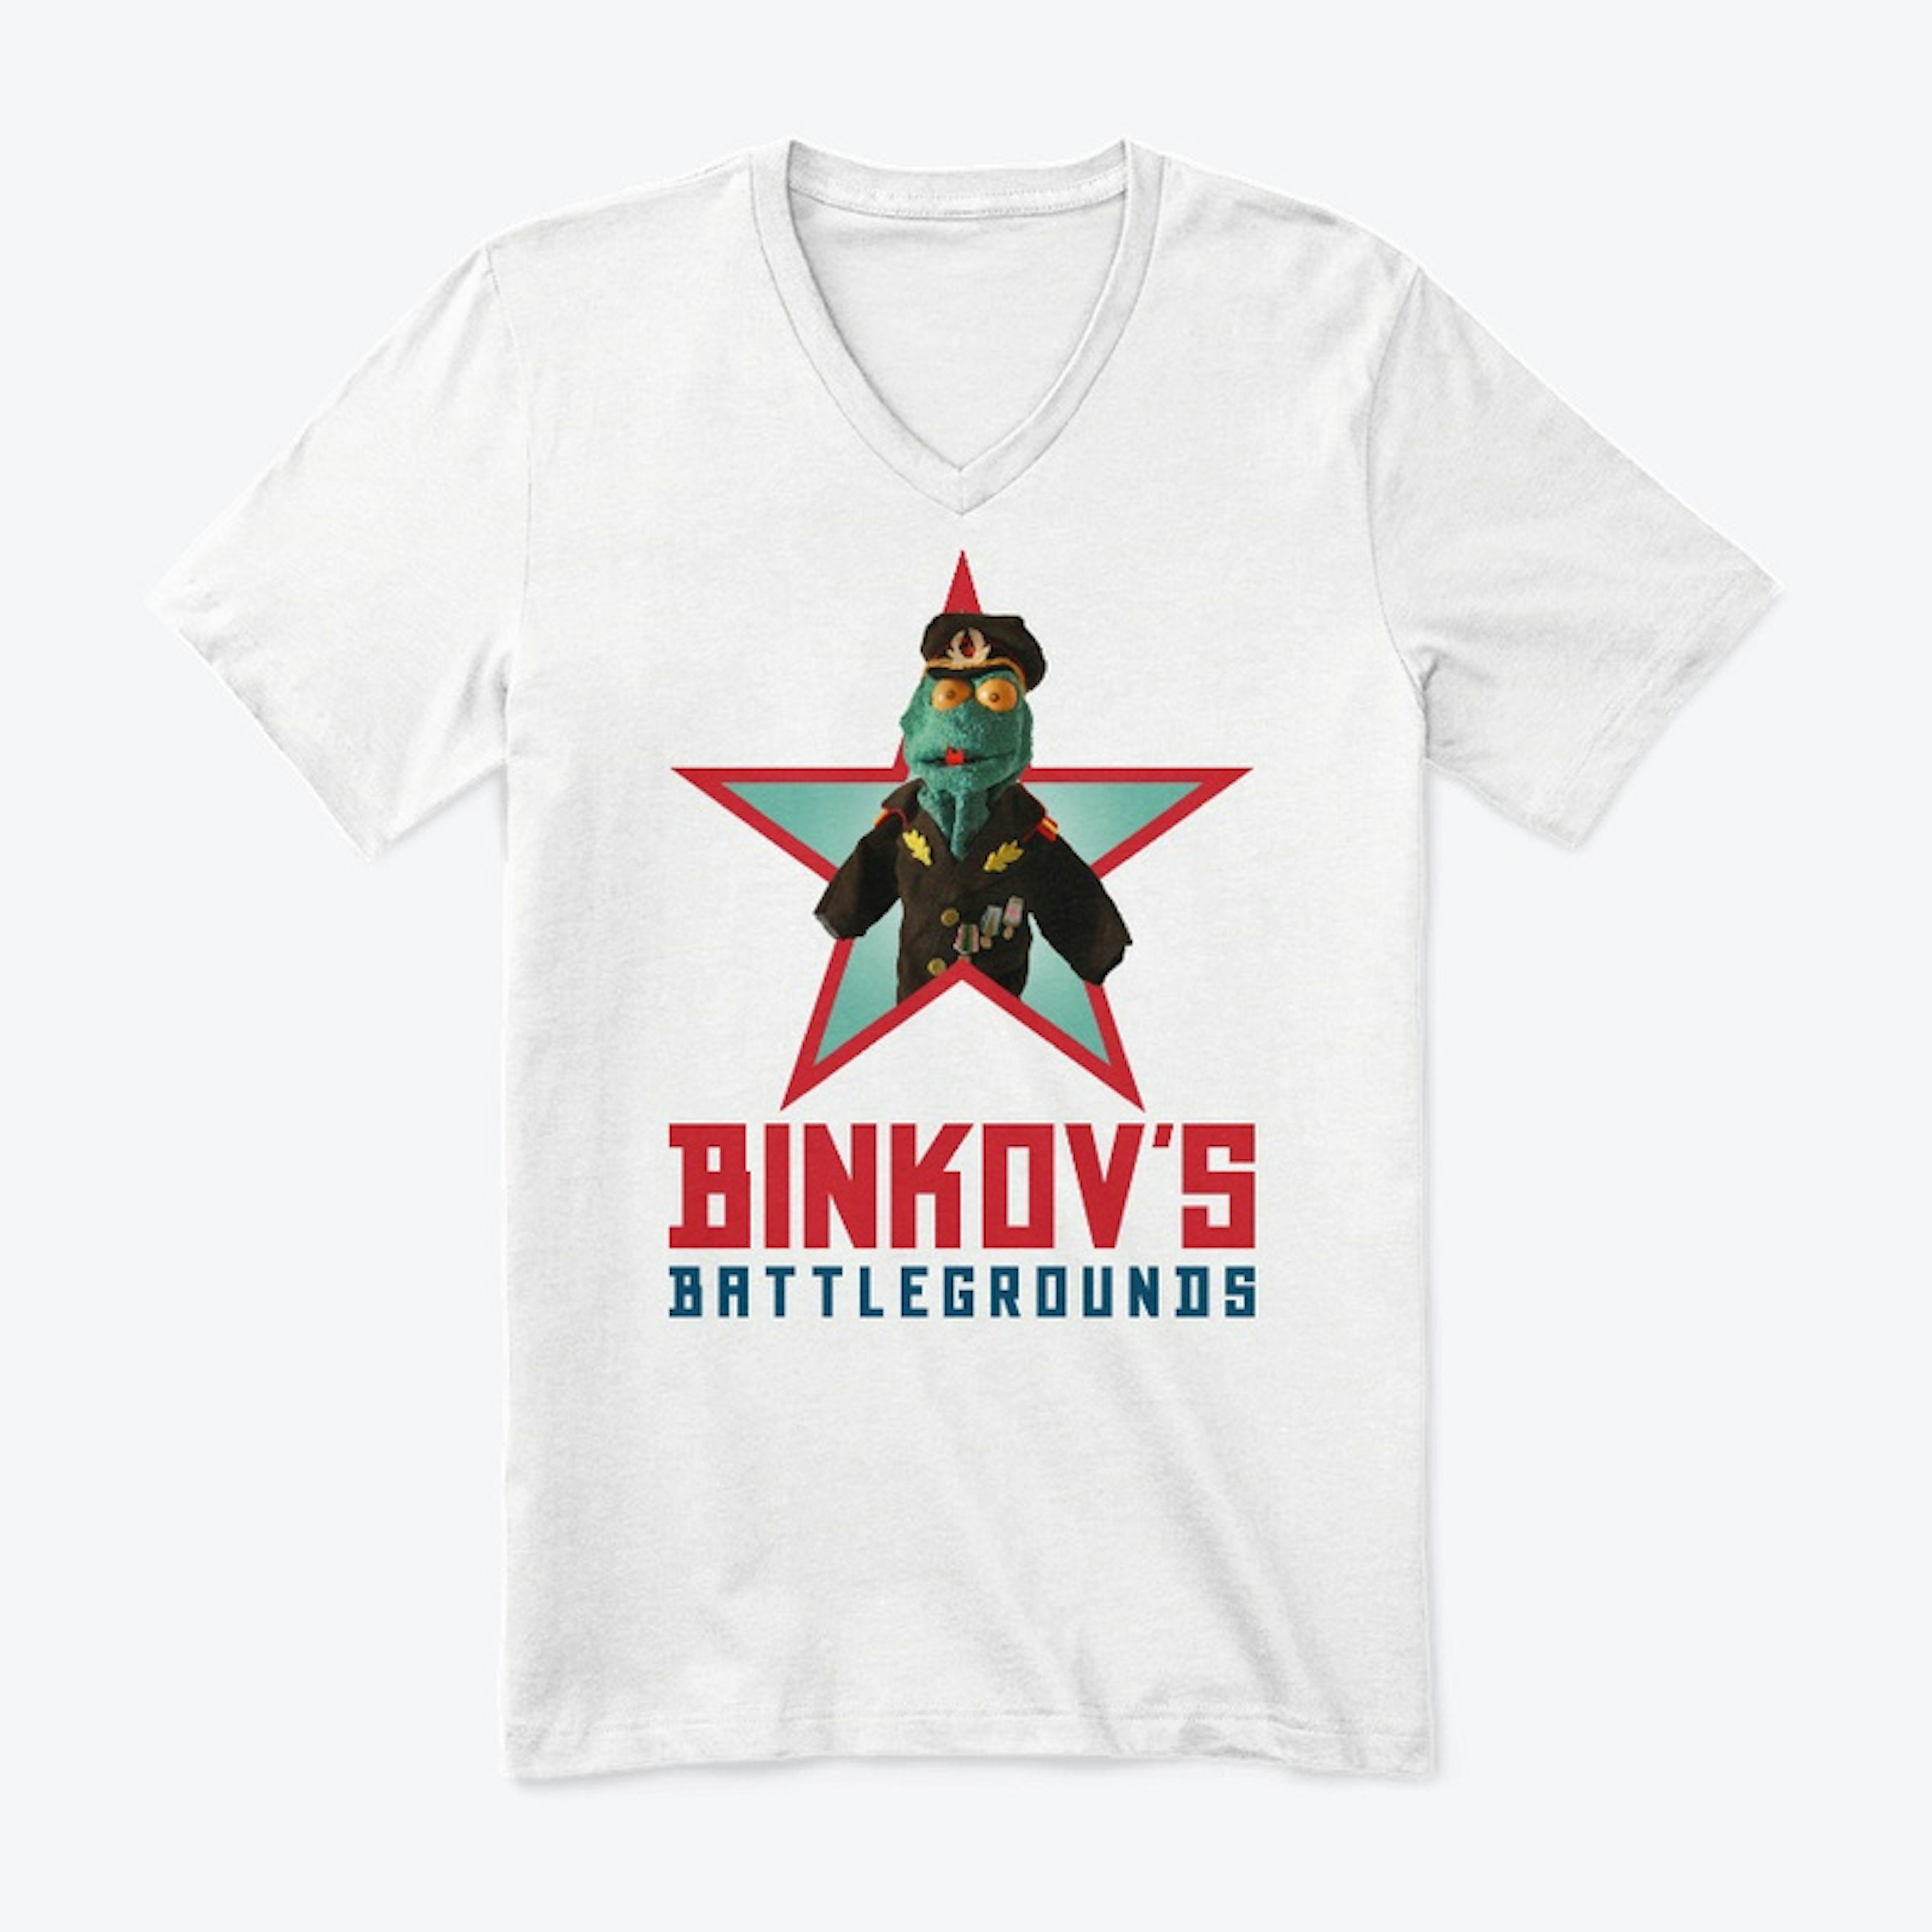 Binkov is a star!